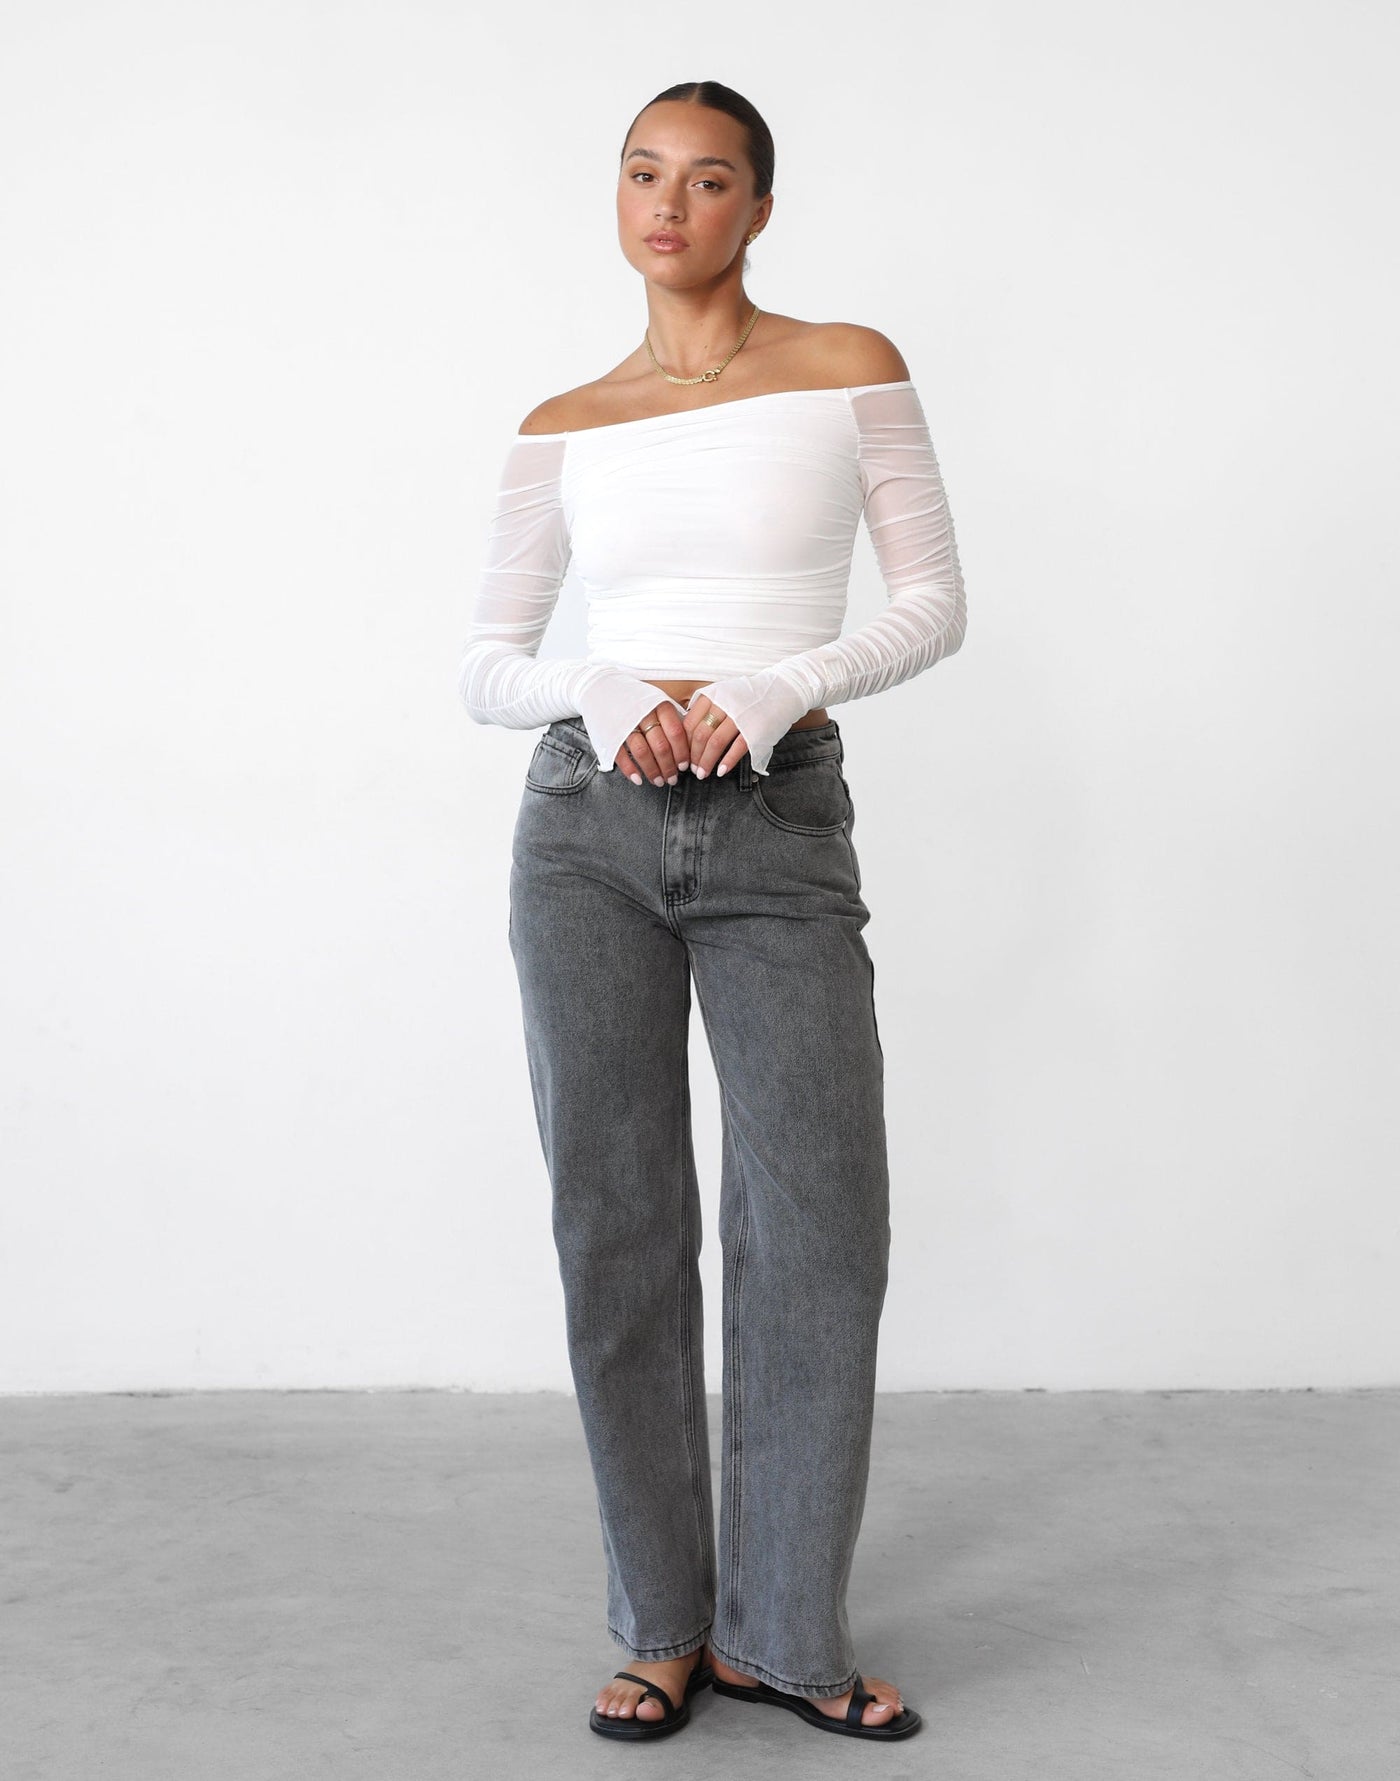 Kellie Long Sleeve Top (White) - Off Shoulder Mesh Sleeve Top - Women's Top - Charcoal Clothing